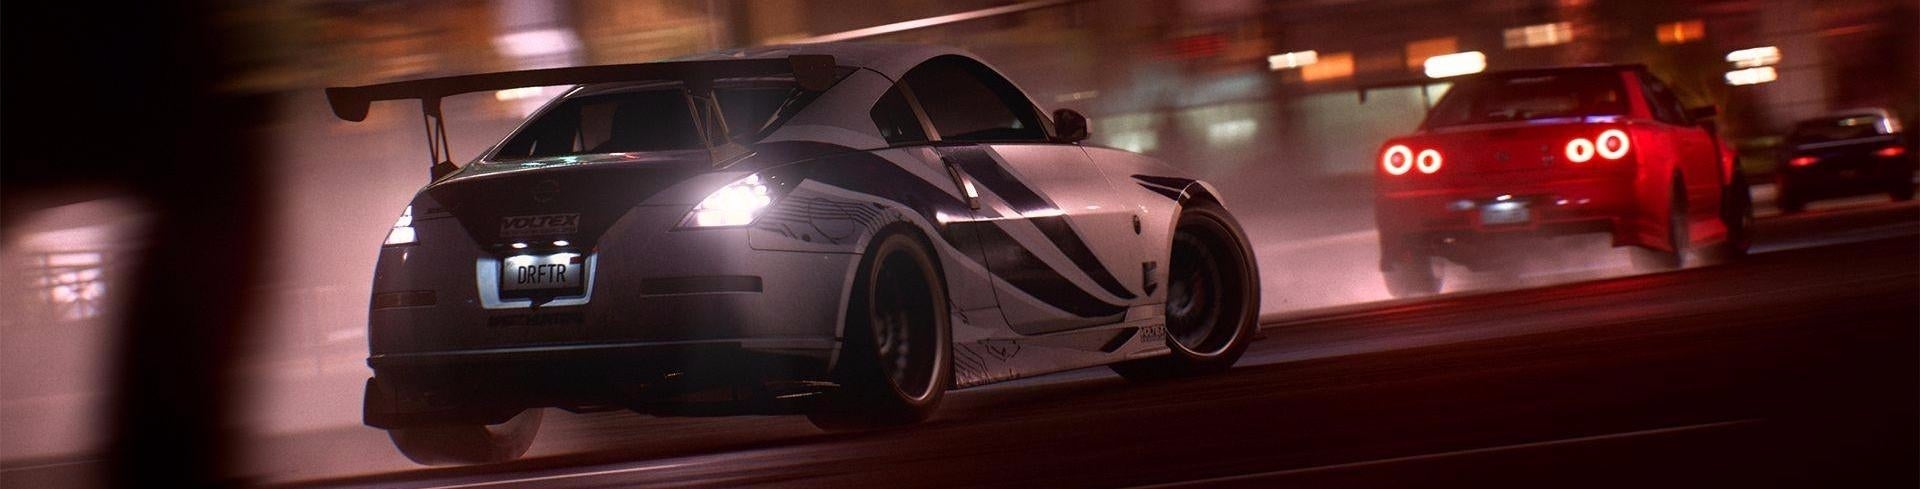 Imagen para Avance de Need for Speed: Payback